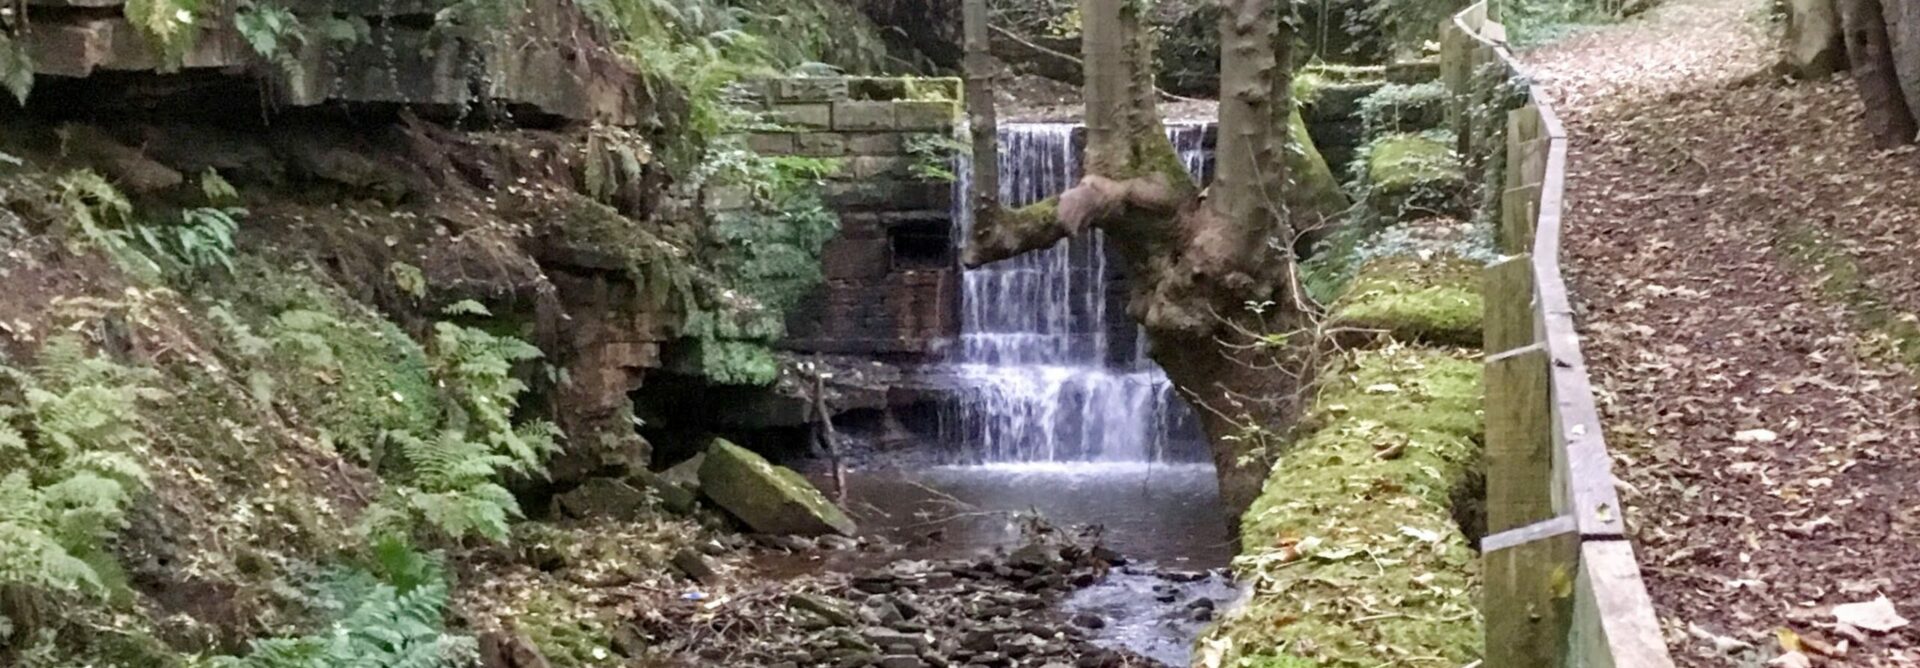 Waterfall on Holcombe Brook